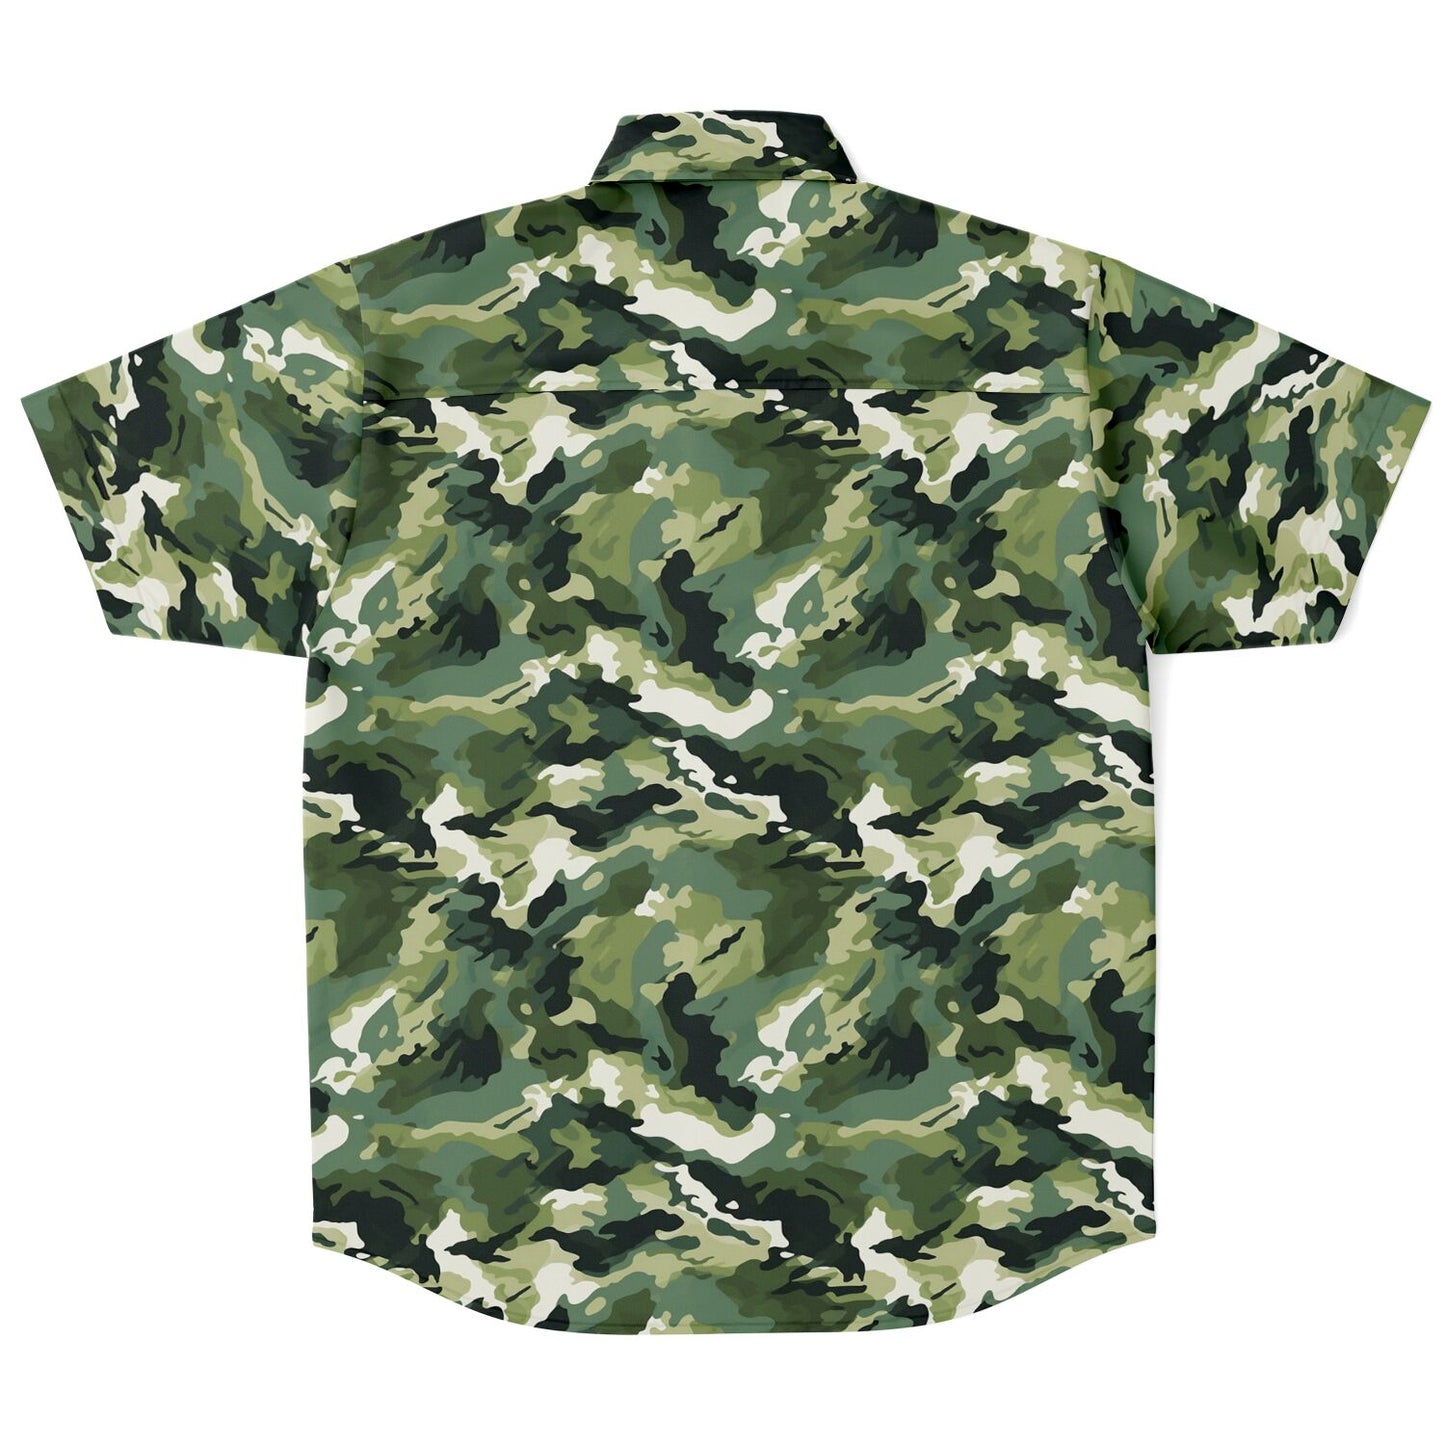 Green Short Sleeve Men Button Up Shirt, Brush Strokes Camo Camouflage Print Casual Buttoned Down Summer Collared Dress Shirt